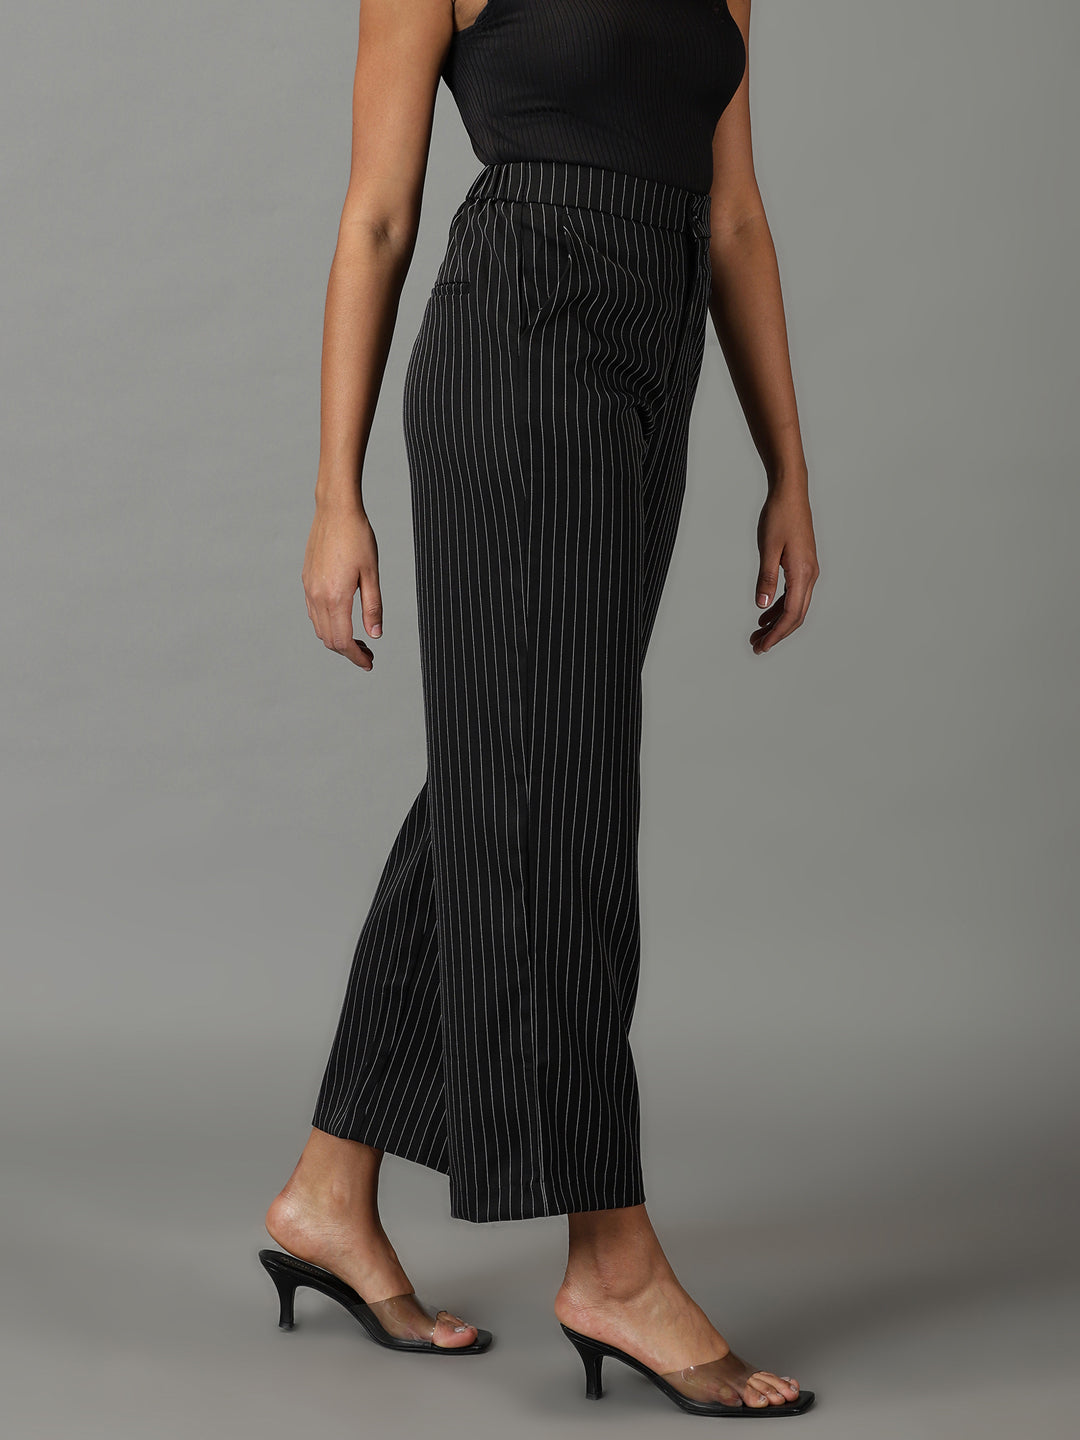 Women's Black Striped Formal Trouser